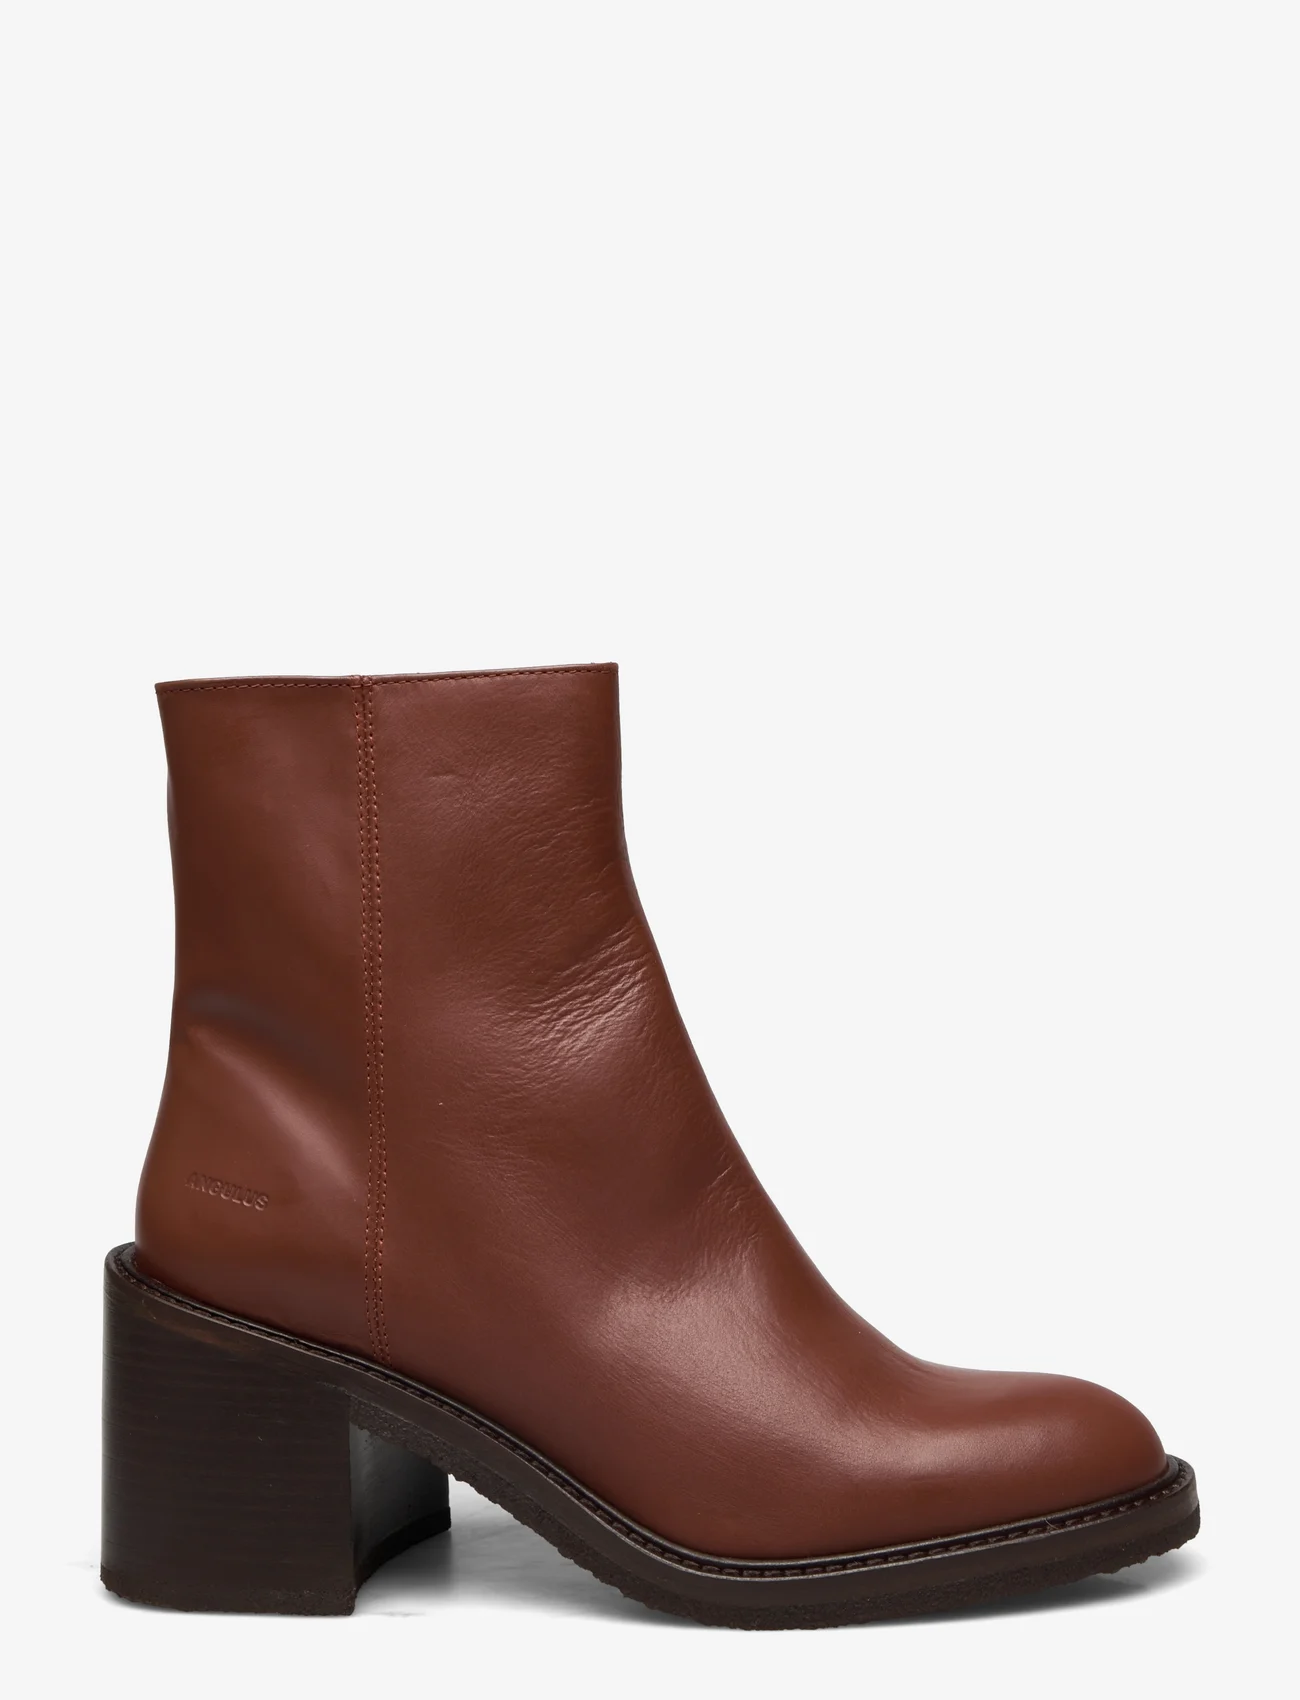 ANGULUS - Bootie - block heel - with zippe - hohe absätze - 1705/036 terracotta - 1